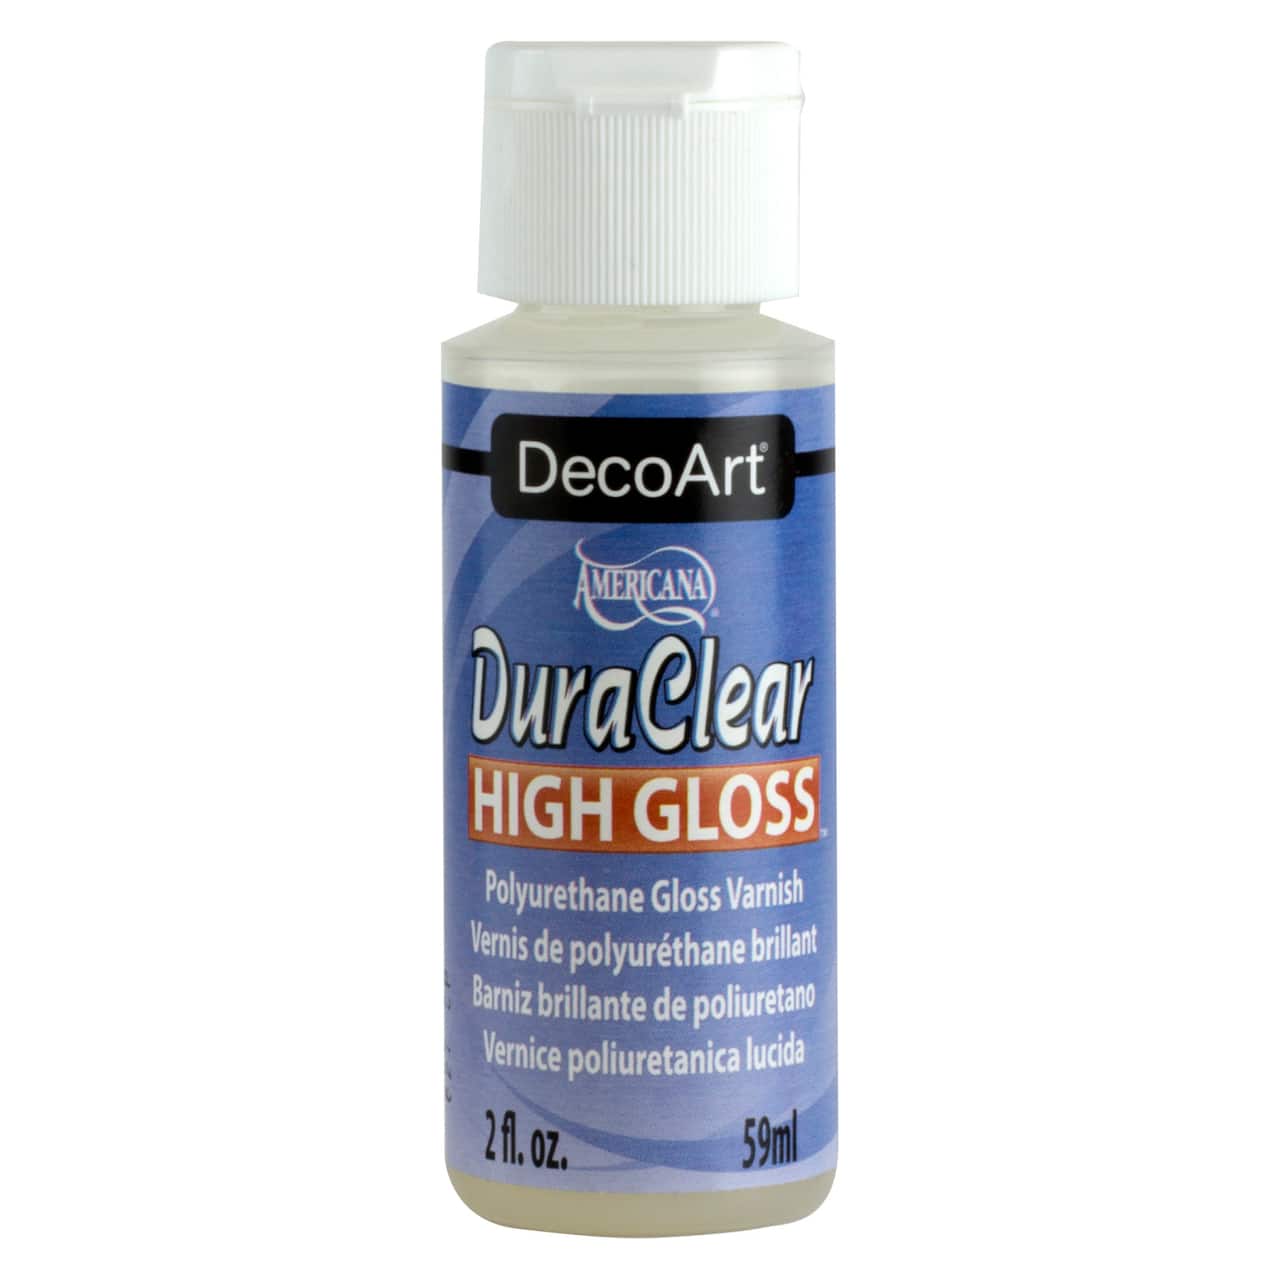 DecoArt® Americana DuraClear High Gloss Varnish, 2oz.